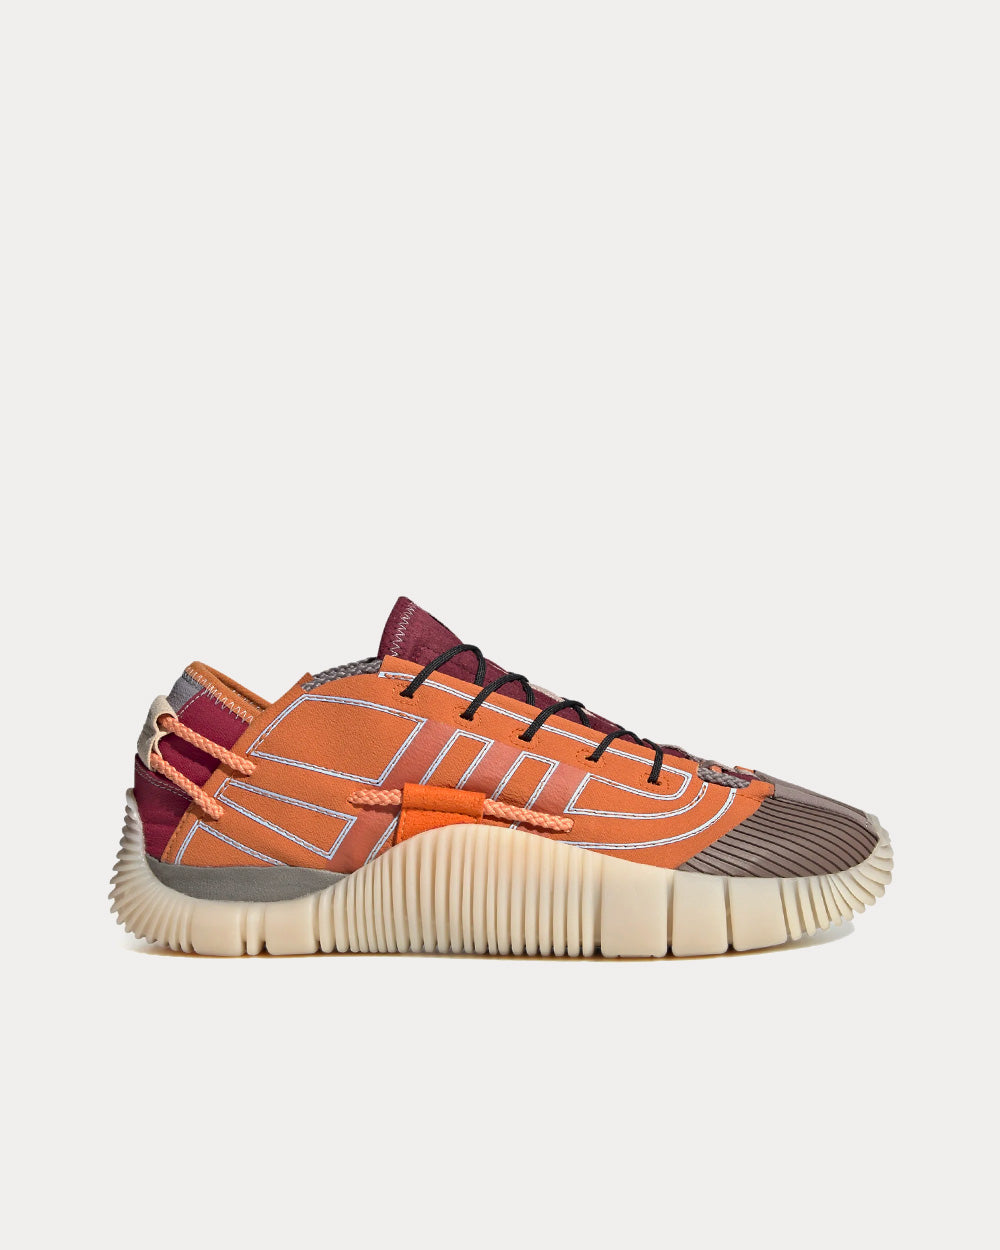 Adidas x Craig Green - Scuba Phormar Tactile Orange Low Top Sneakers